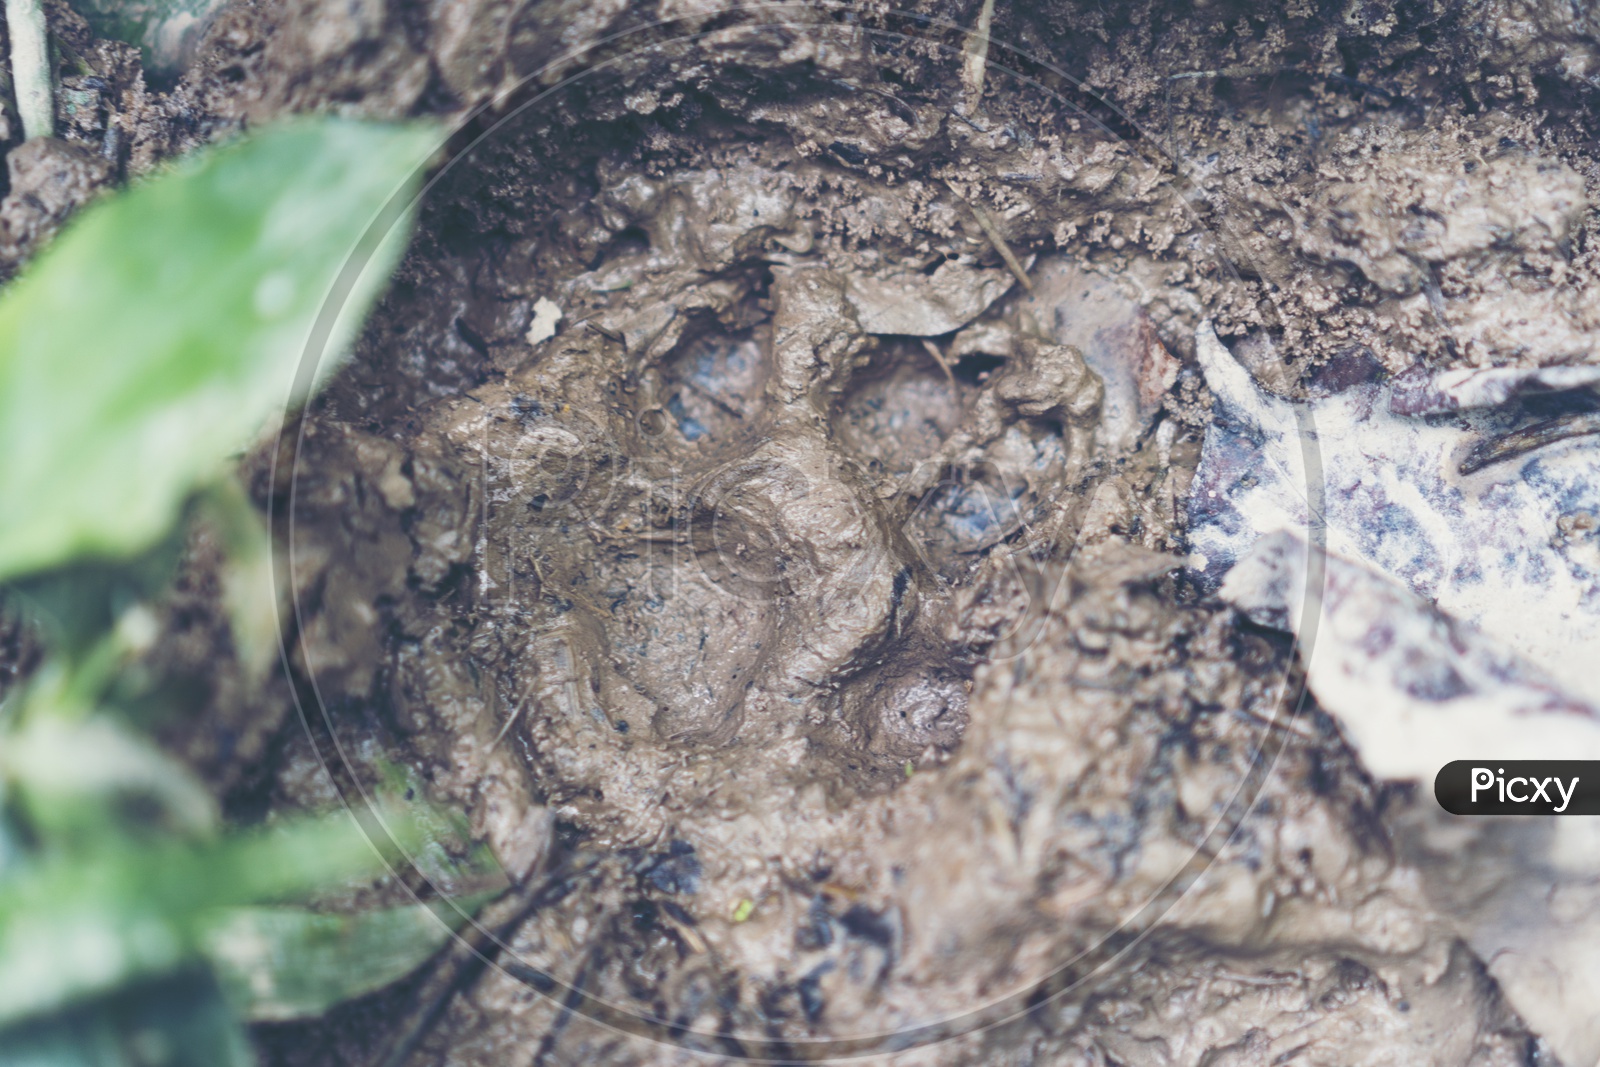 Footprint of wildlife on the mud ground